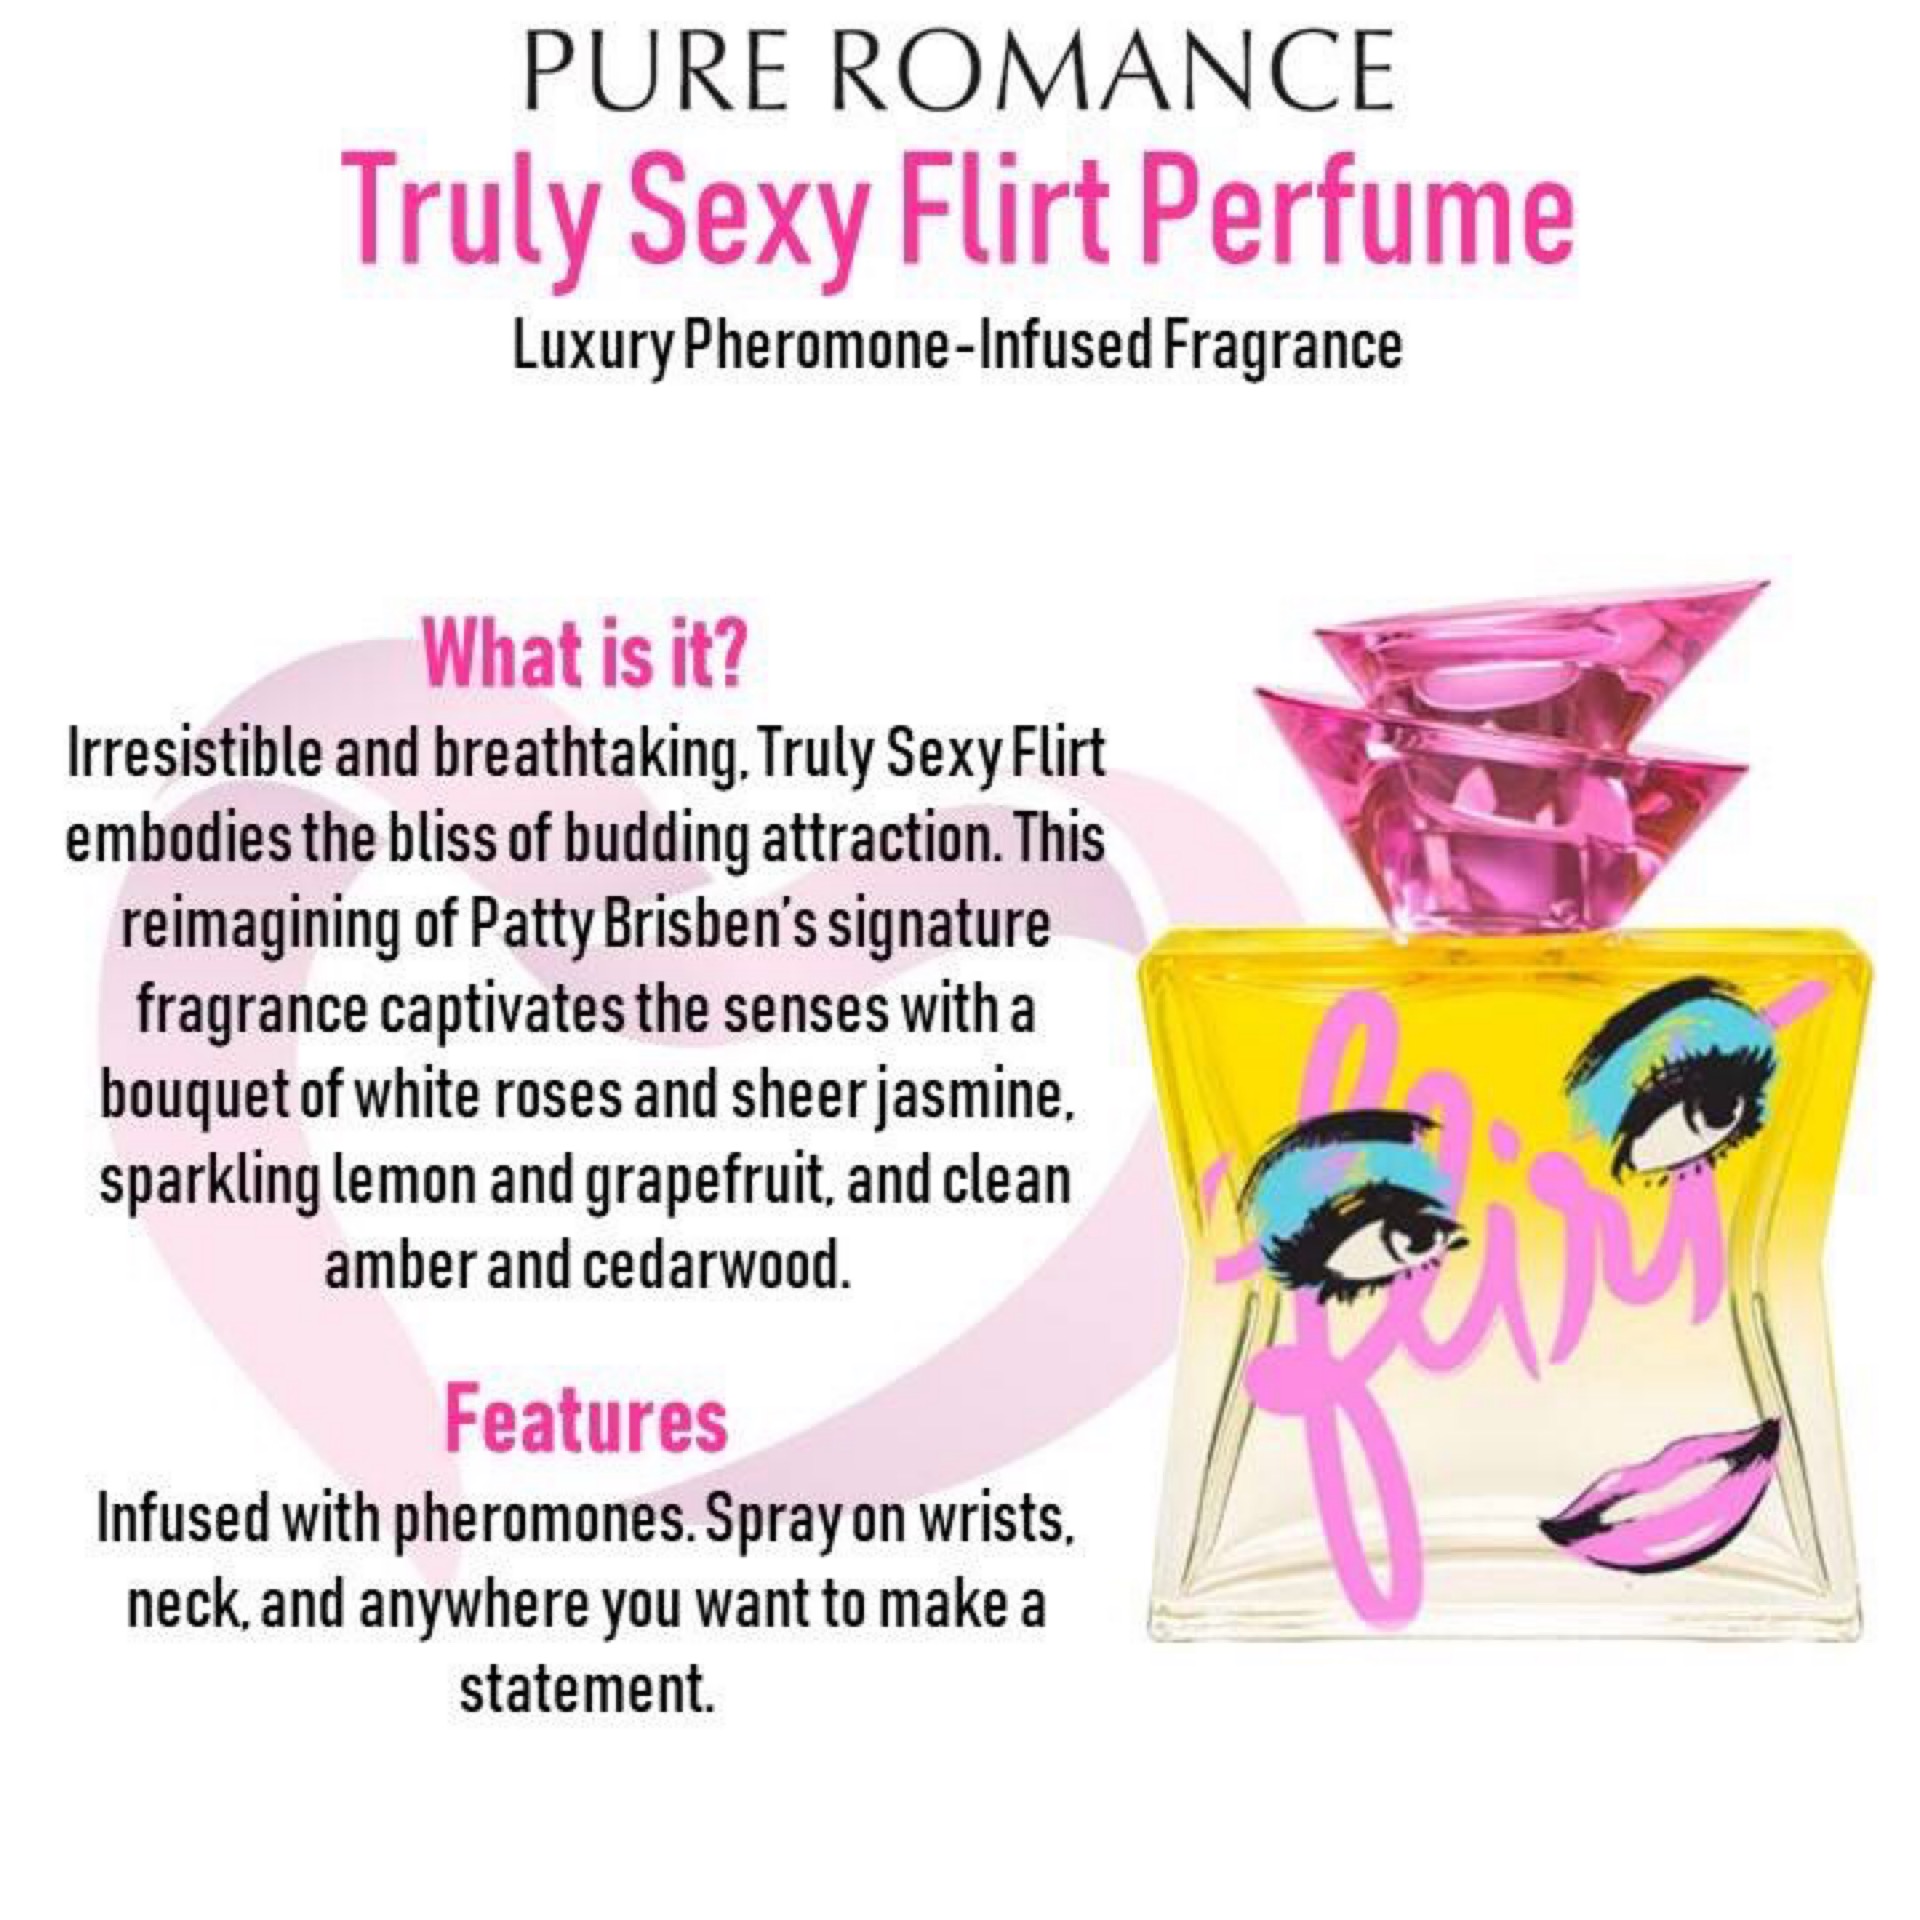 flirt pure romance perfume